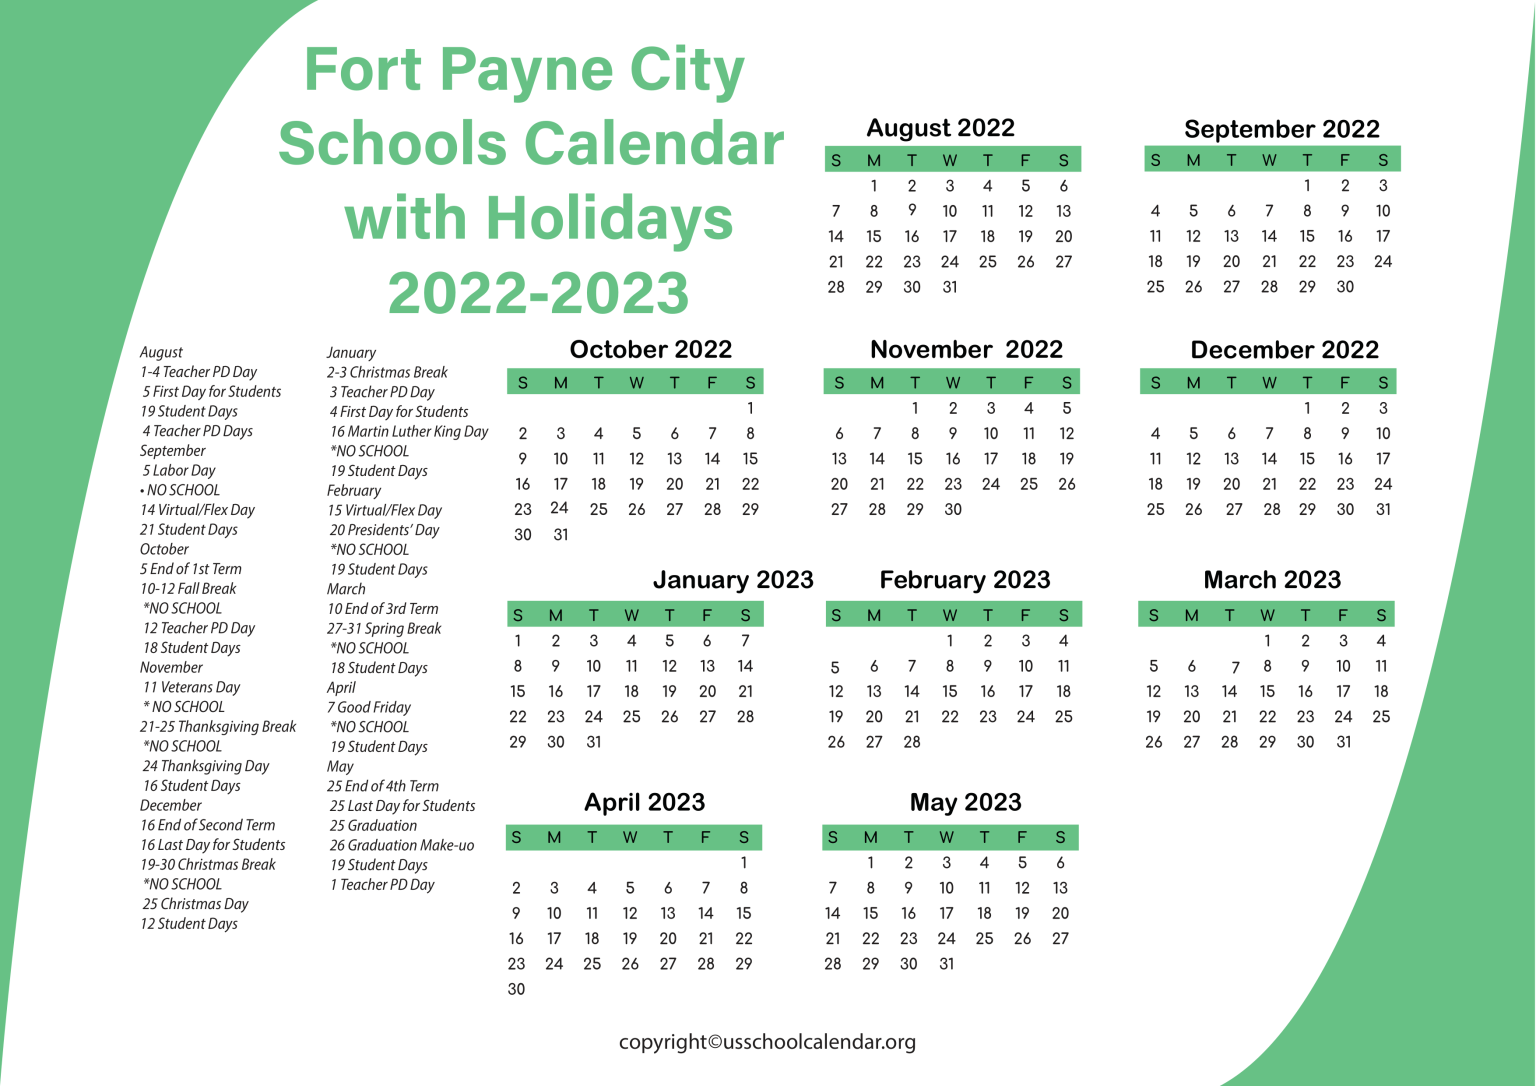 [FPCS] Fort Payne City Schools Calendar with Holidays 2023